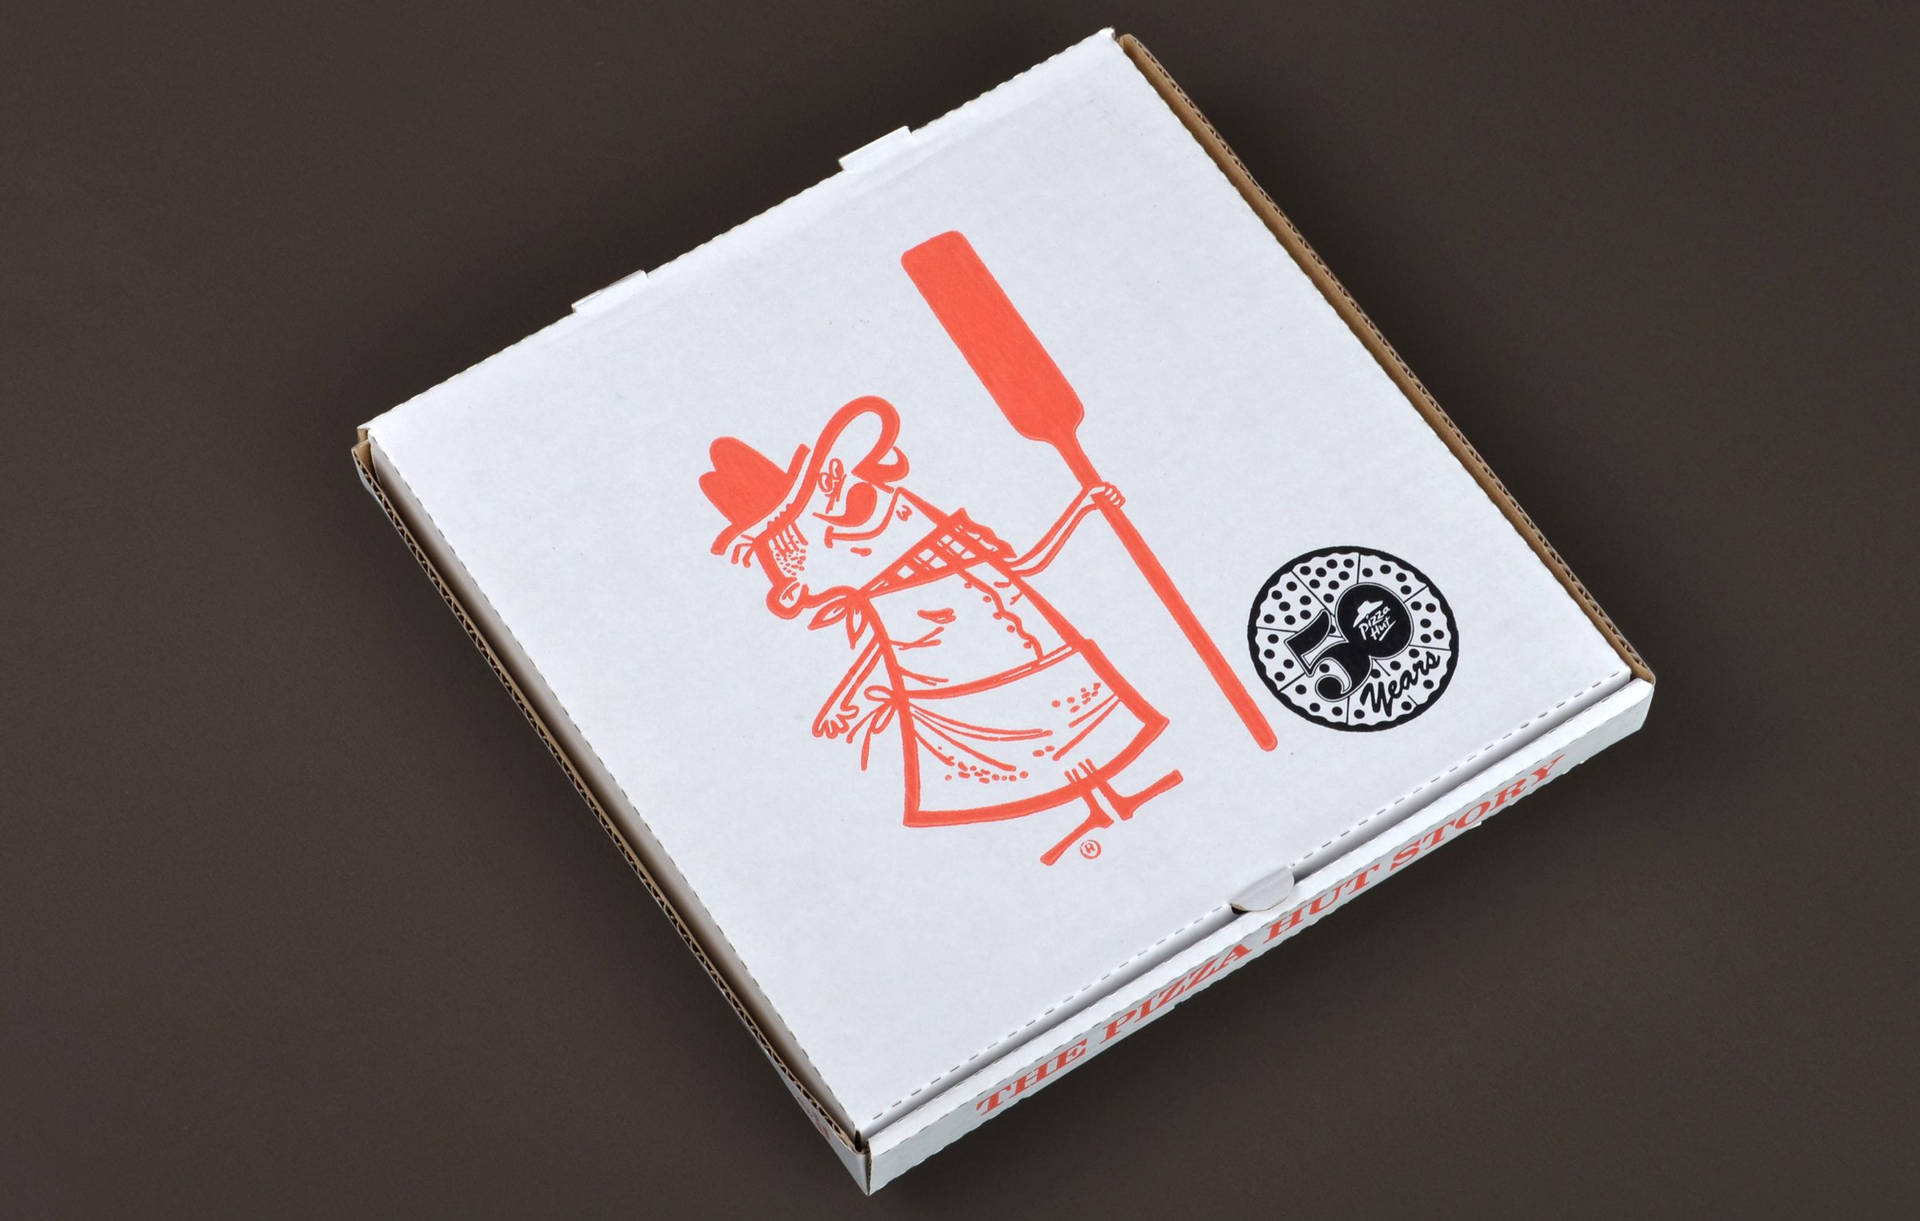 The Pizza Hut Story Box